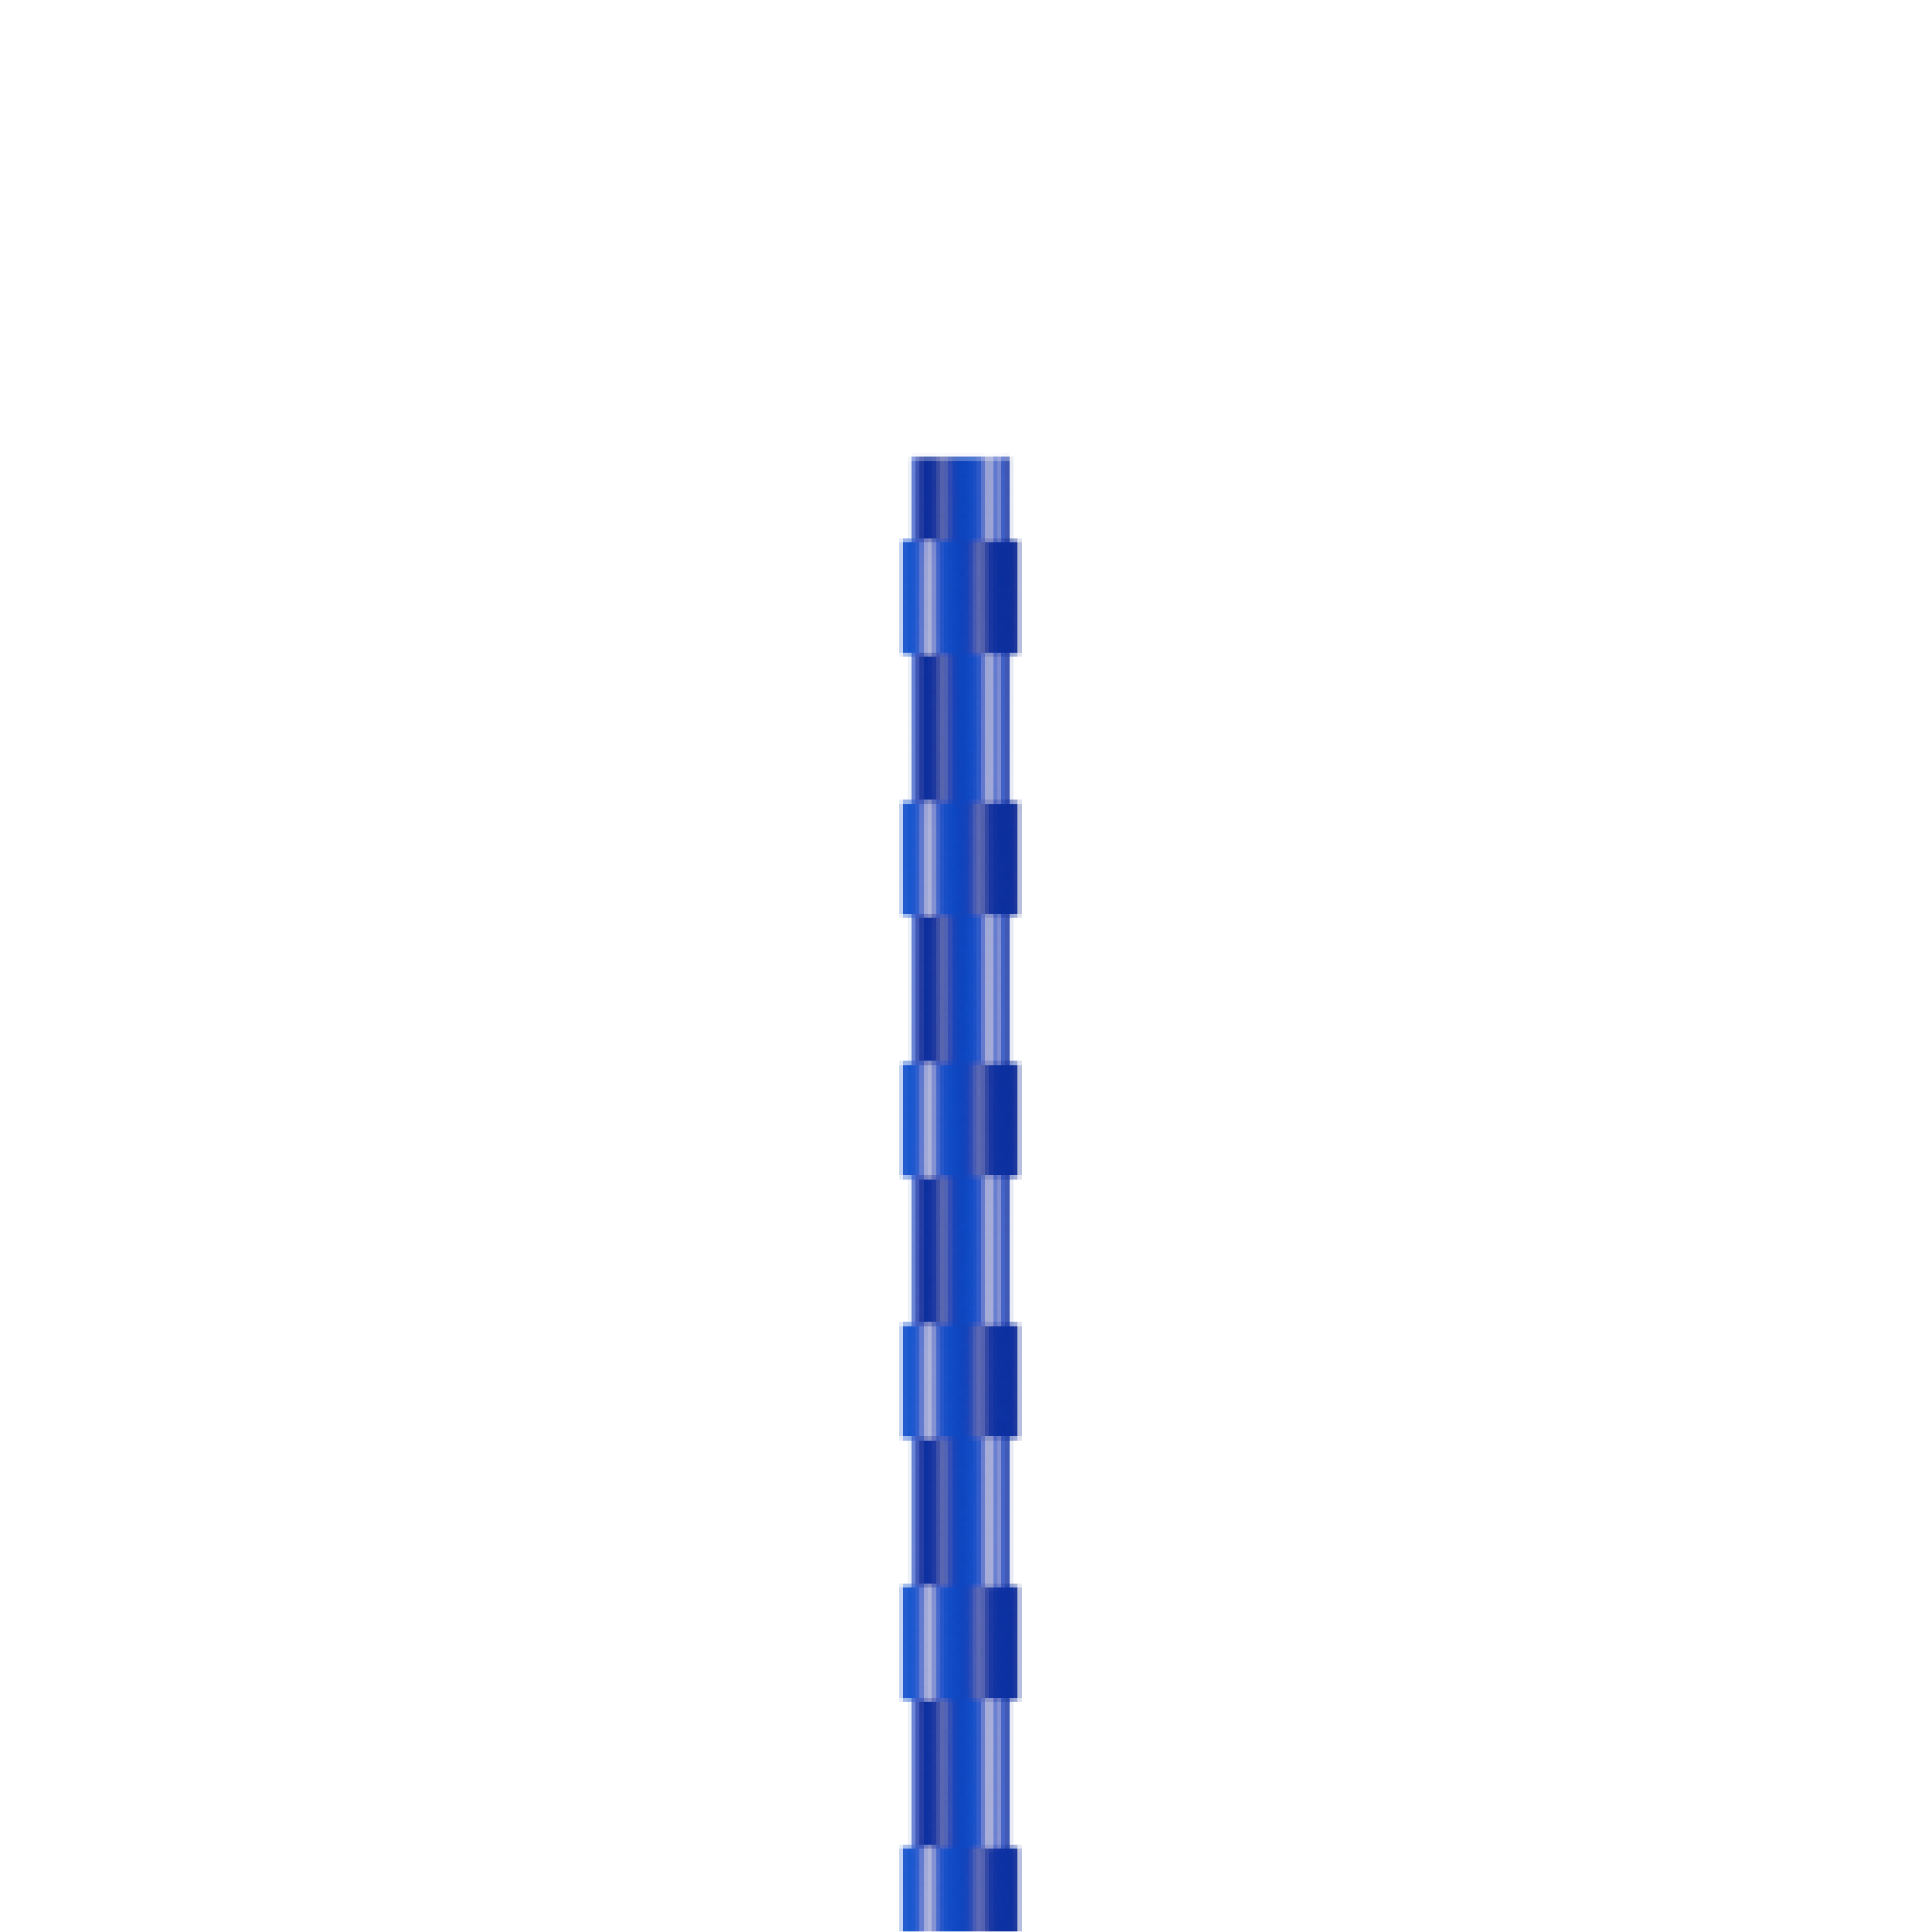 RAADO 6mm Plastic Spiral Binding Comb, Blue